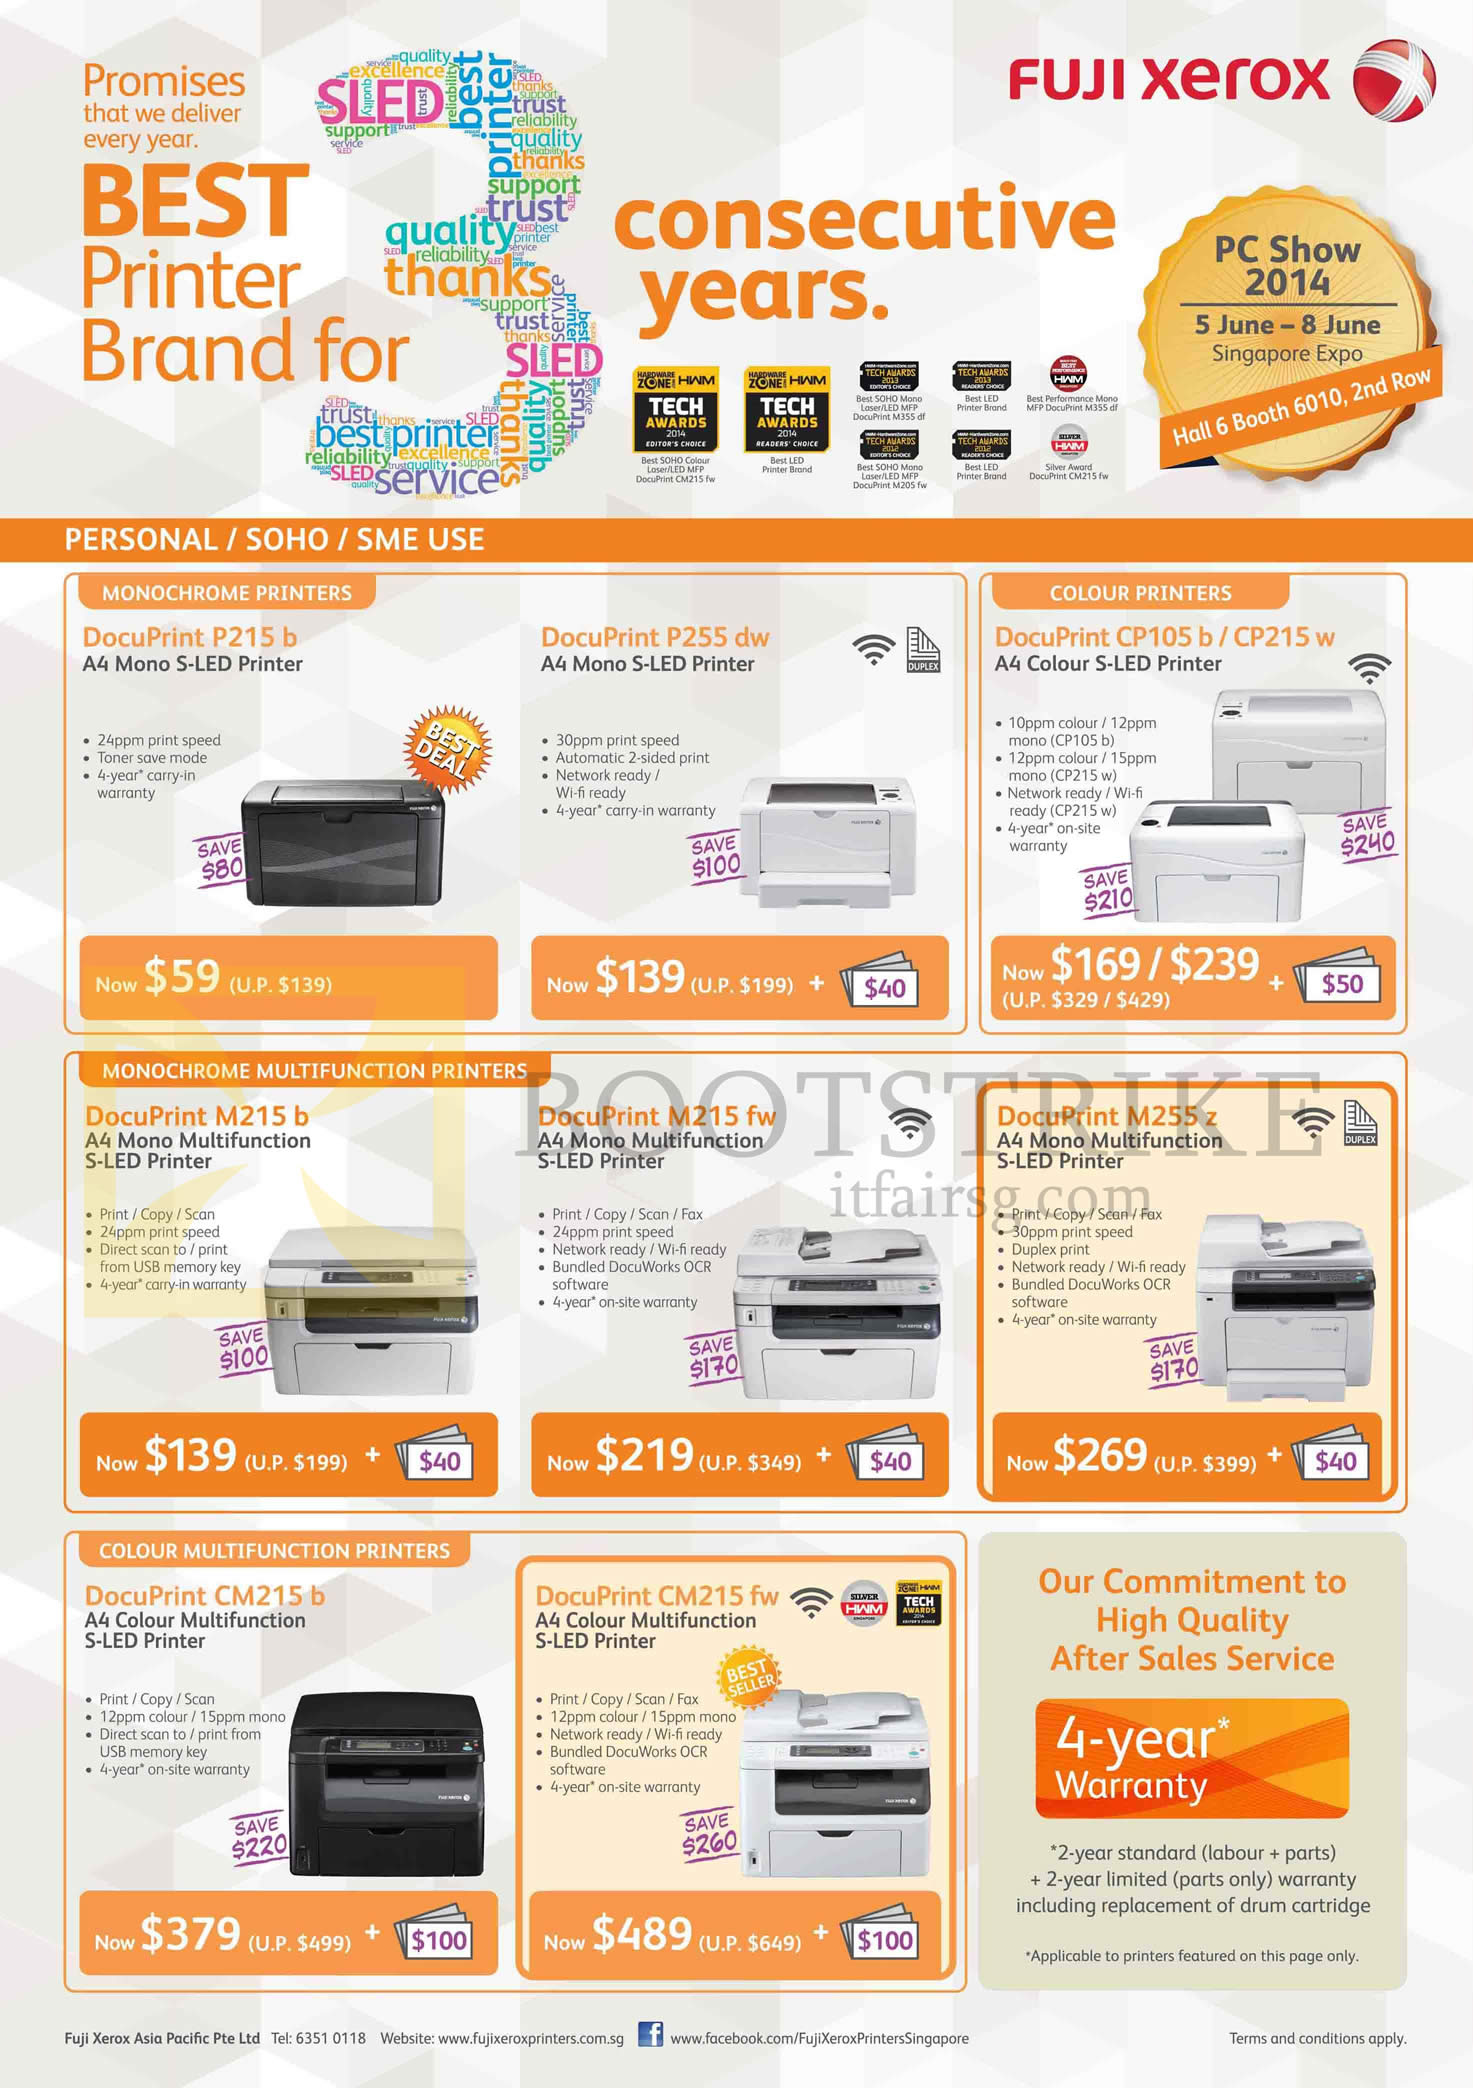 PC SHOW 2014 price list image brochure of Fuji Xerox Printers DocuPrint P215b, P255dw, CP105b, CP215w, M215b, M215fw, M255z, CM215b, CM215fw